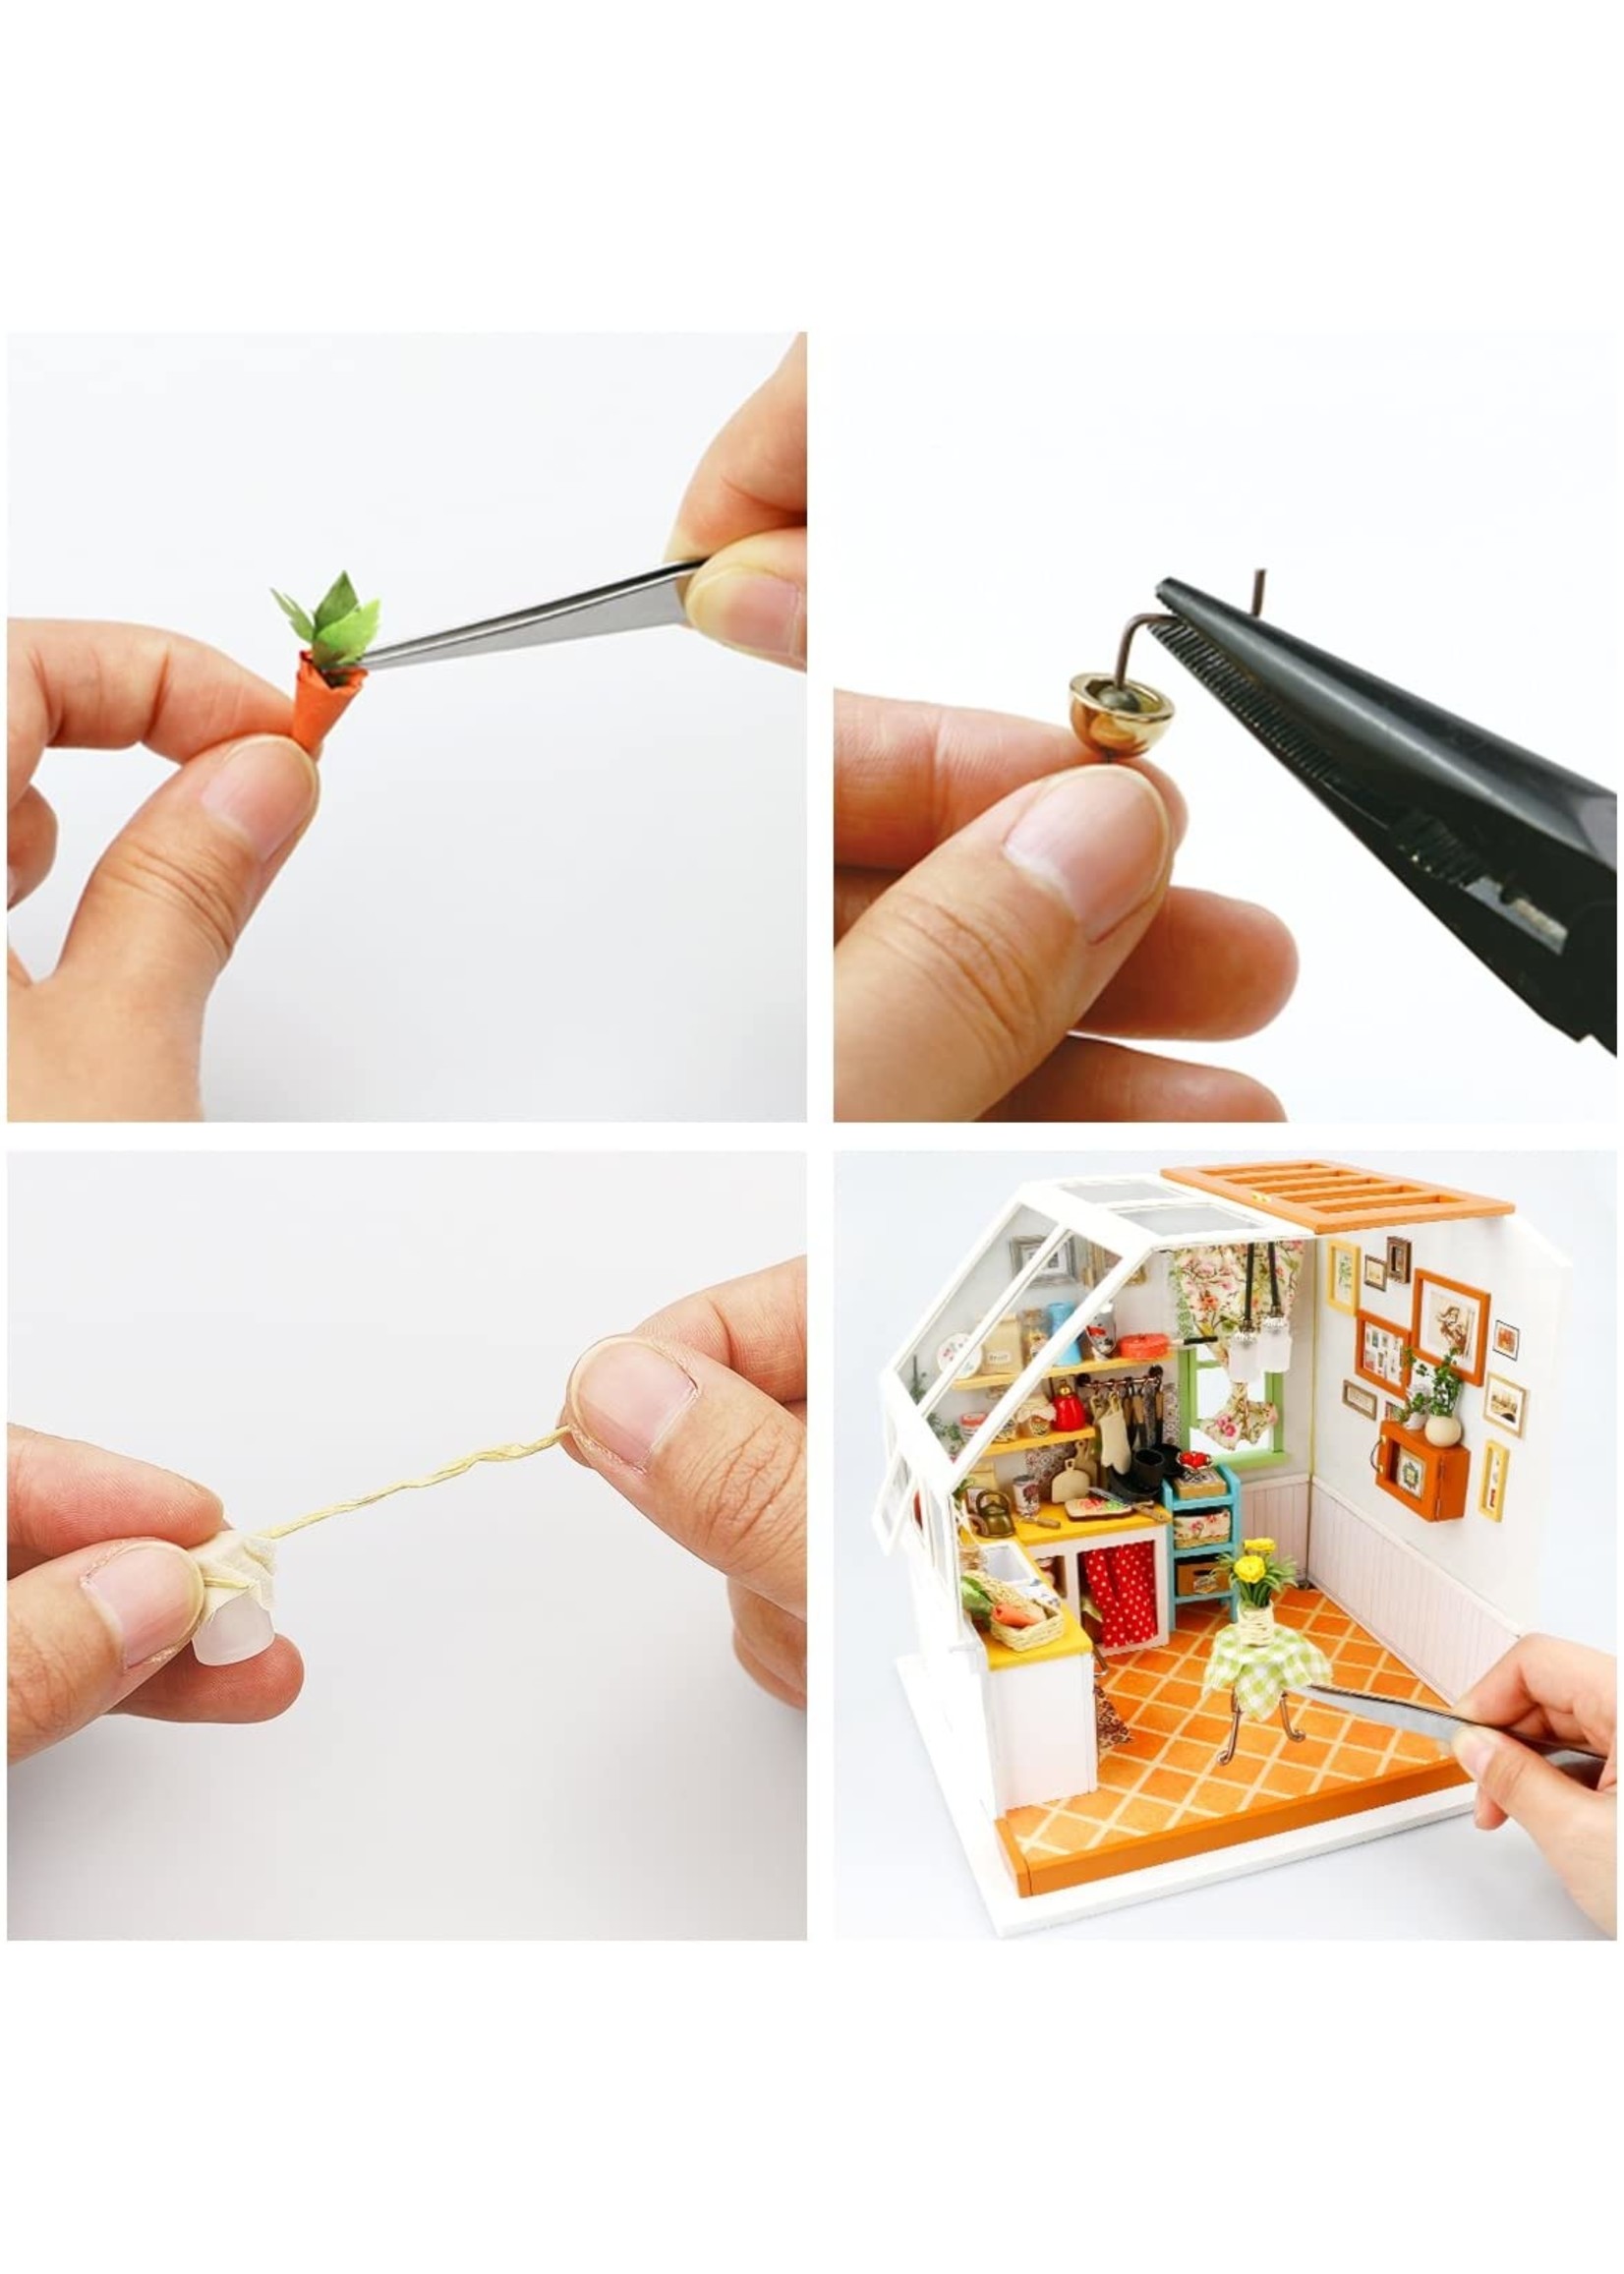 Jason's Kitchen DIY Miniature Dollhouse Kit